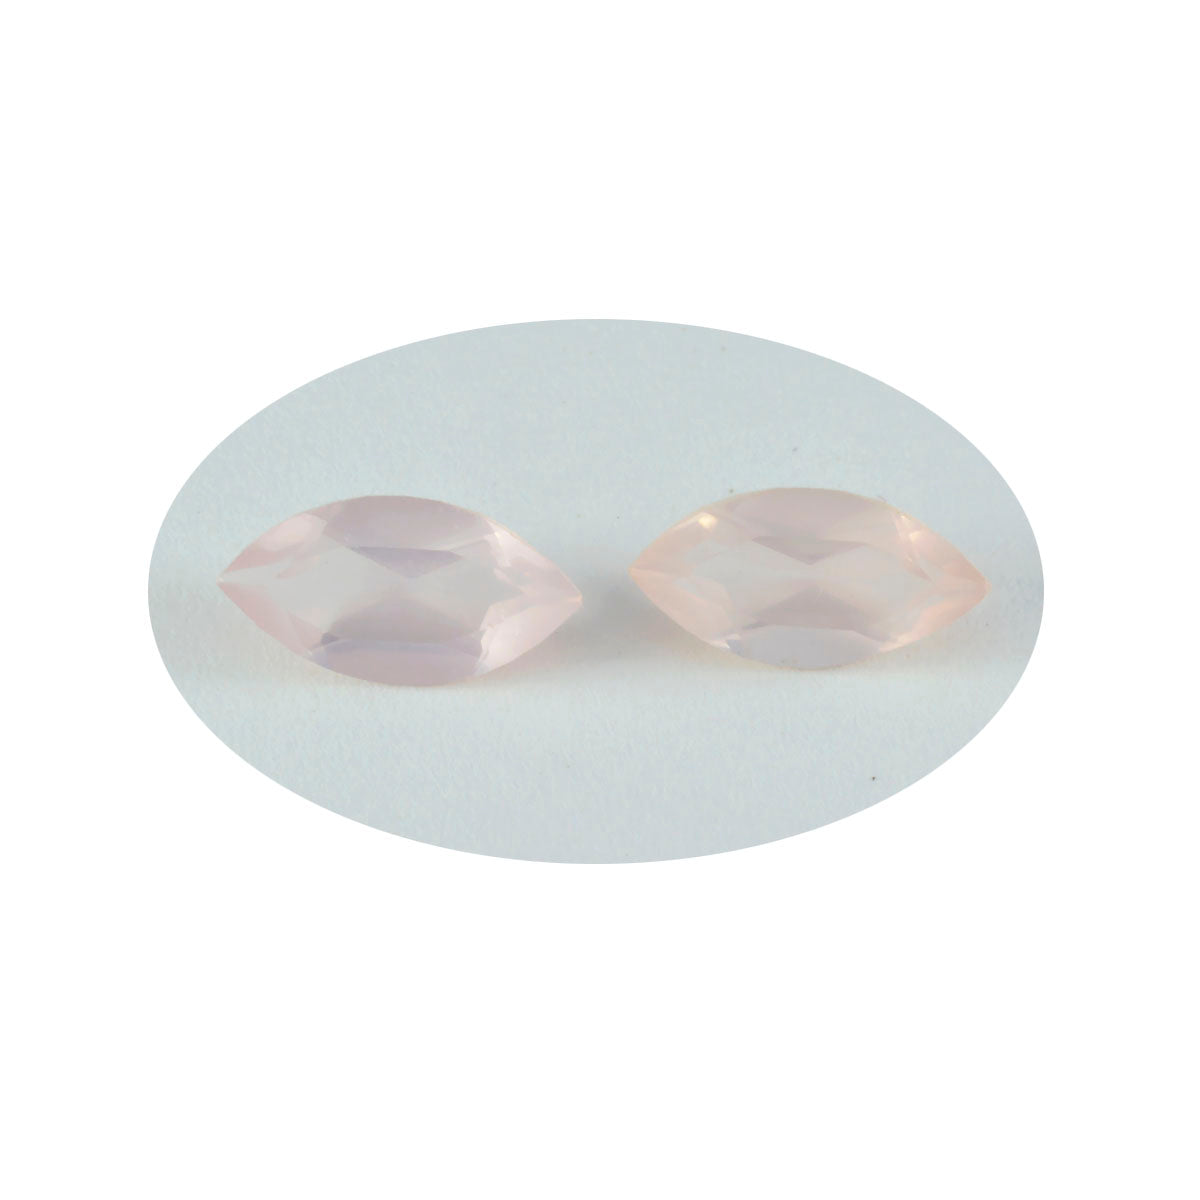 Riyogems 1PC Pink Rose Quartz Faceted 11x22 mm Marquise Shape handsome Quality Loose Gems